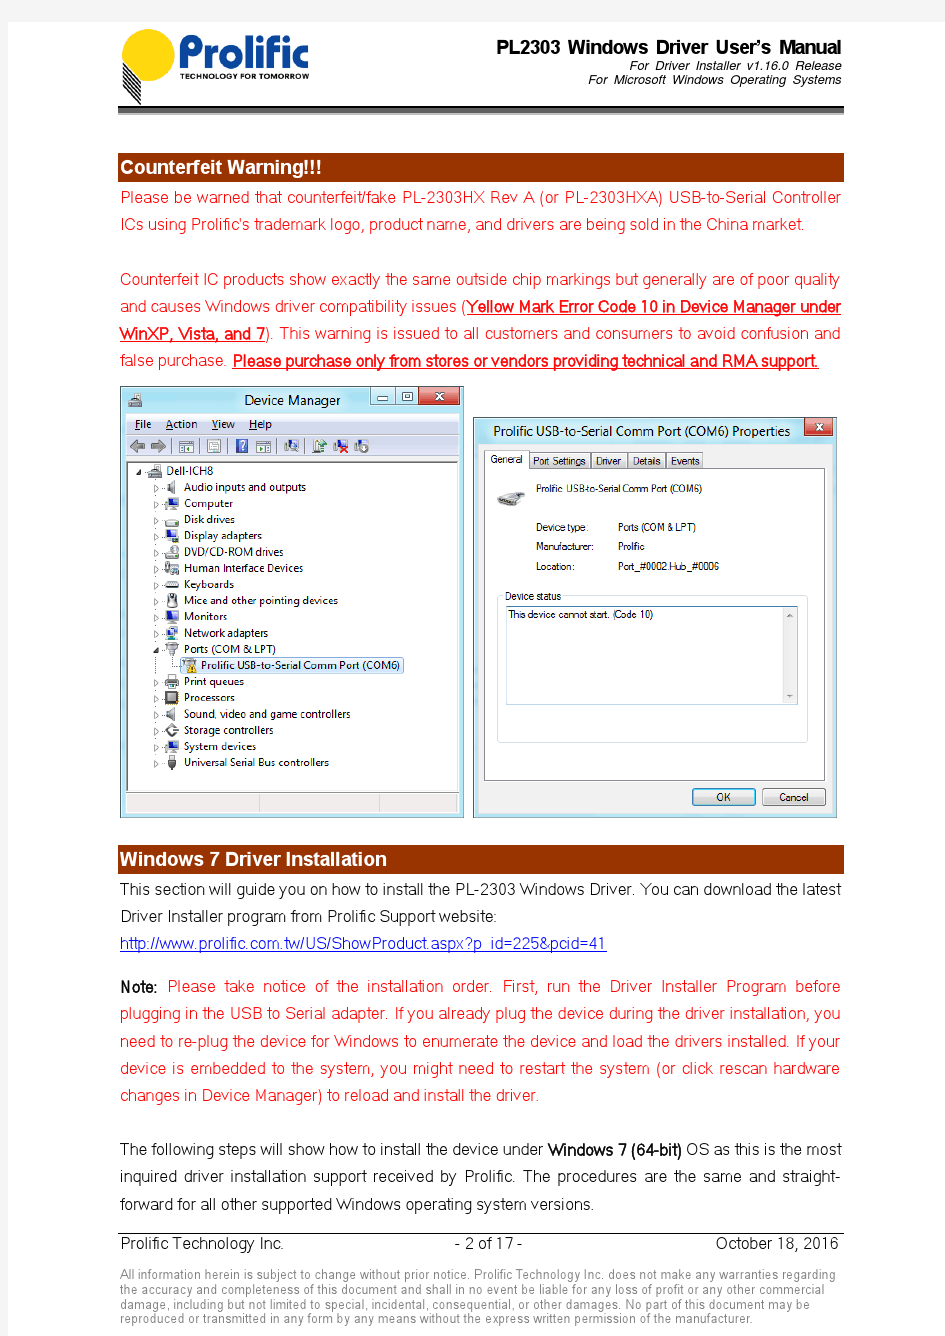 PL2303 Windows Driver User Manual v1.16.0